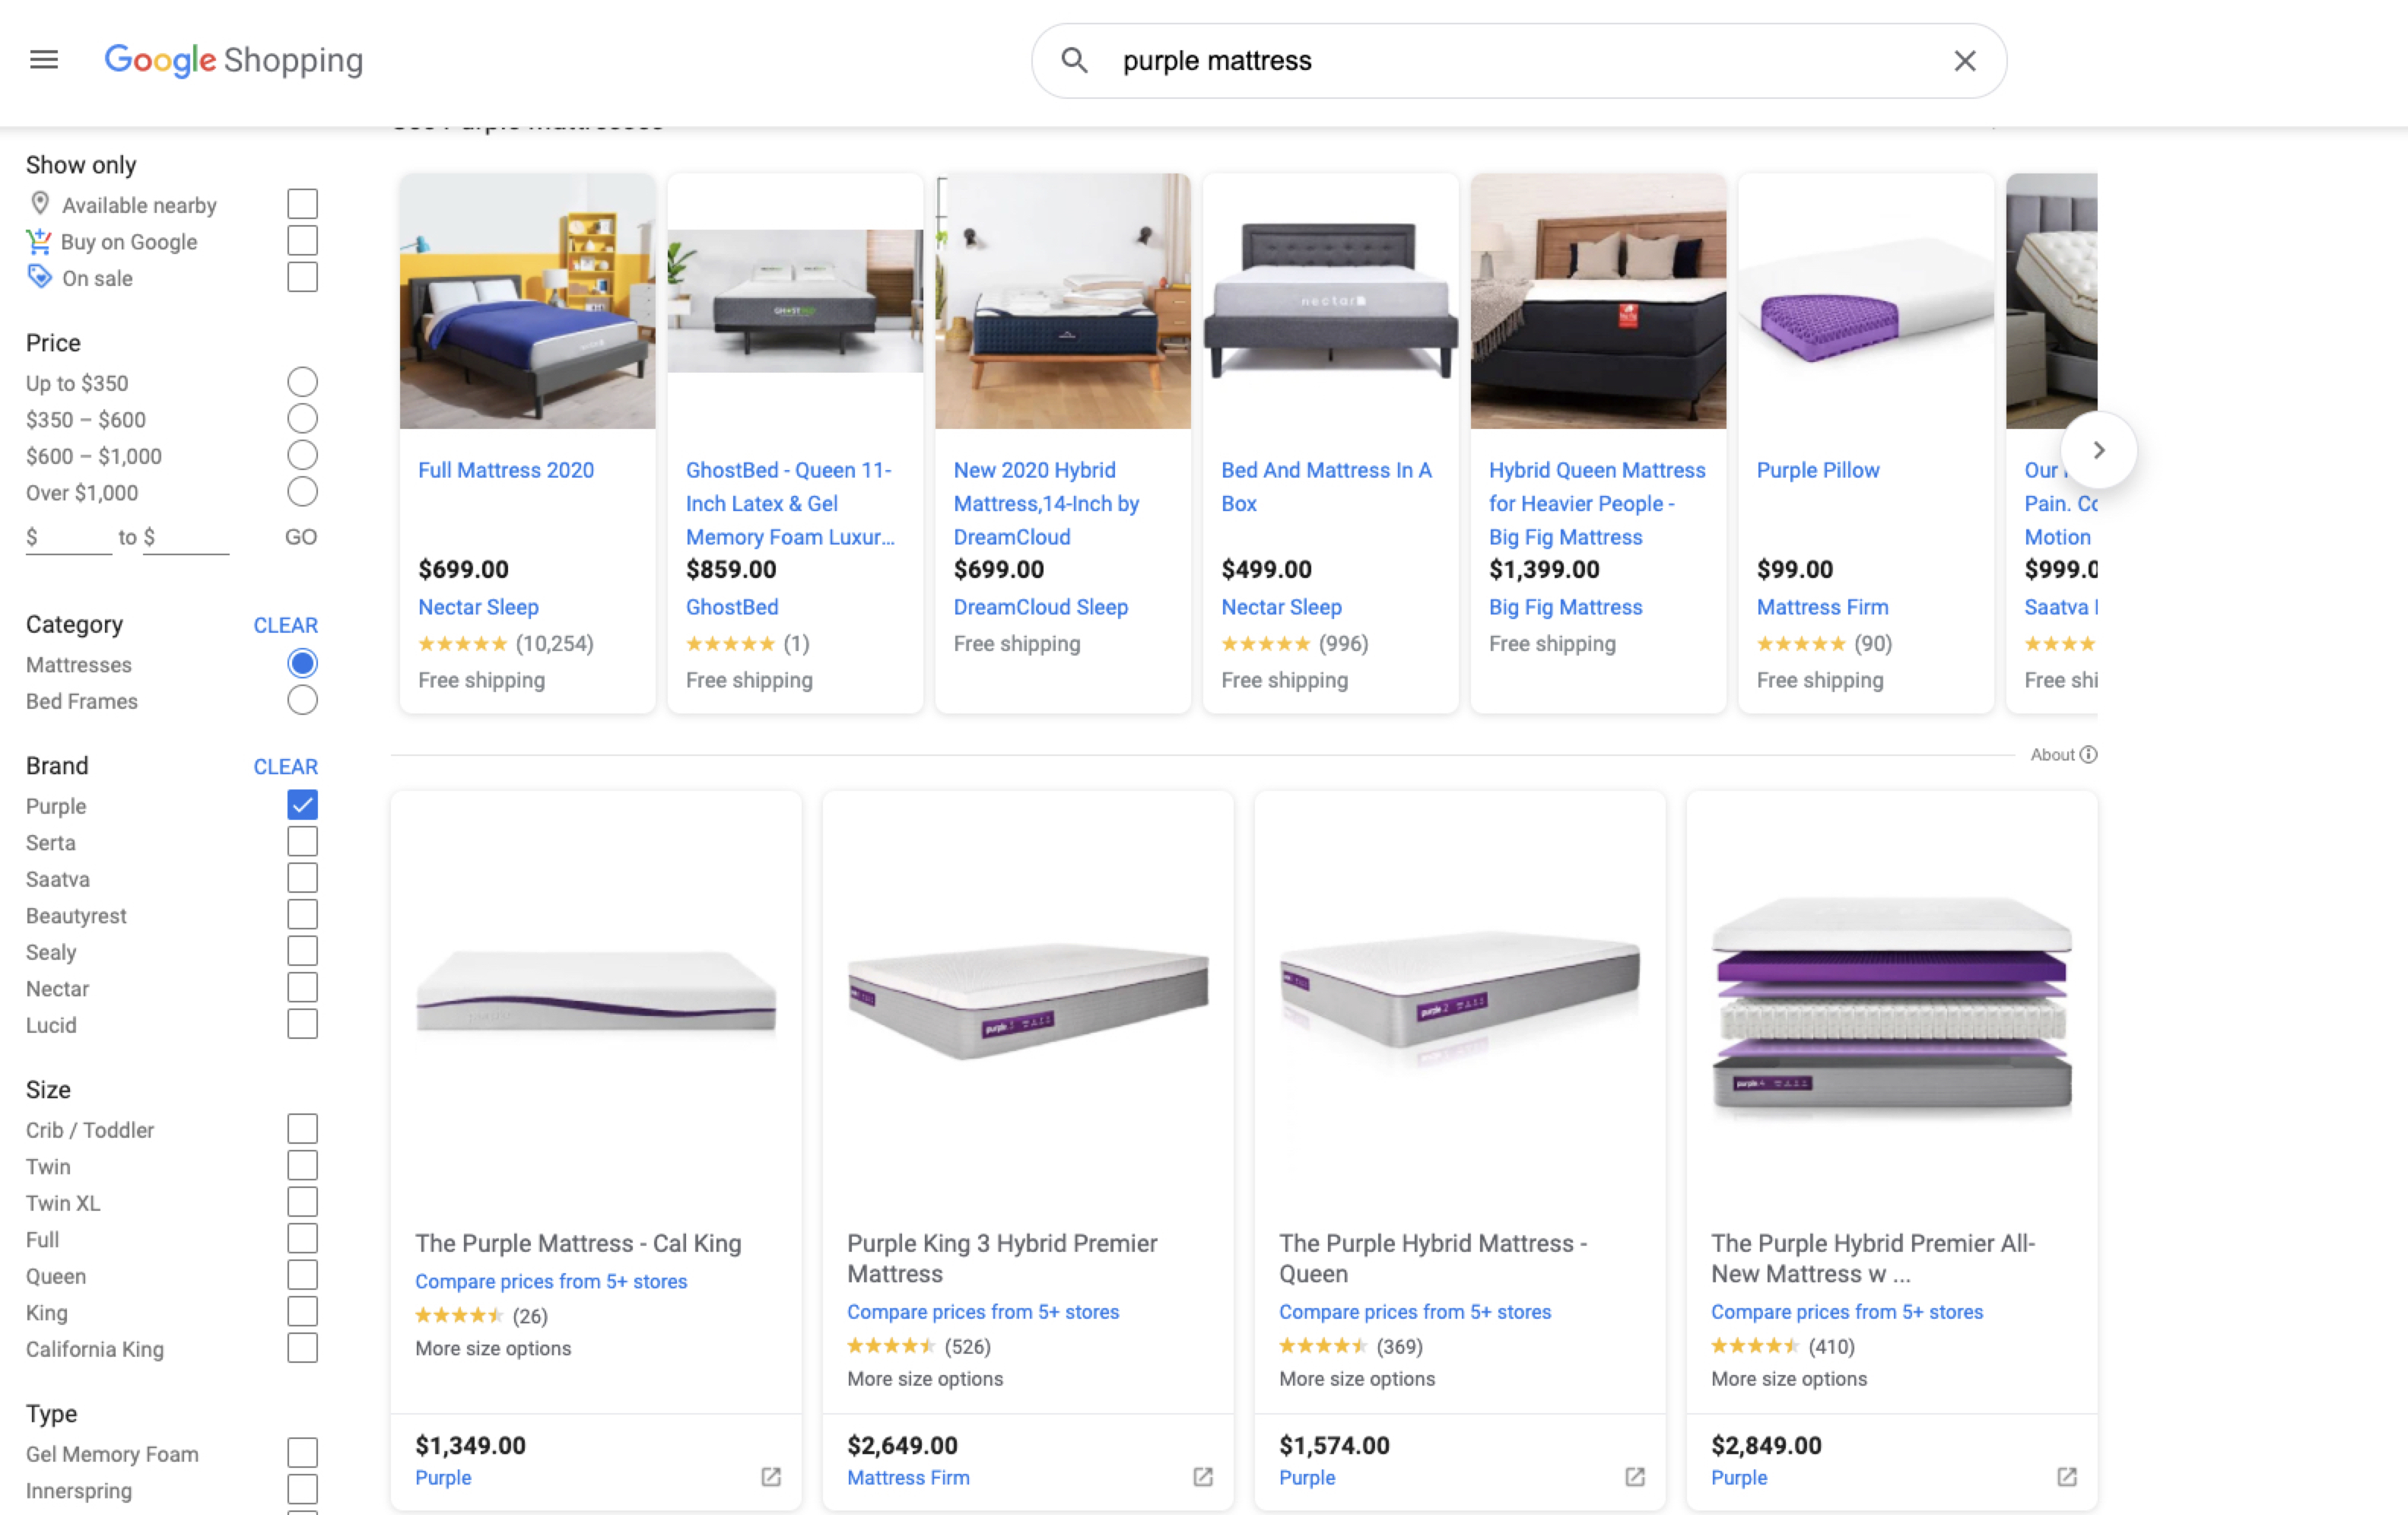 Googles comparison shopping engine, Google Shopping